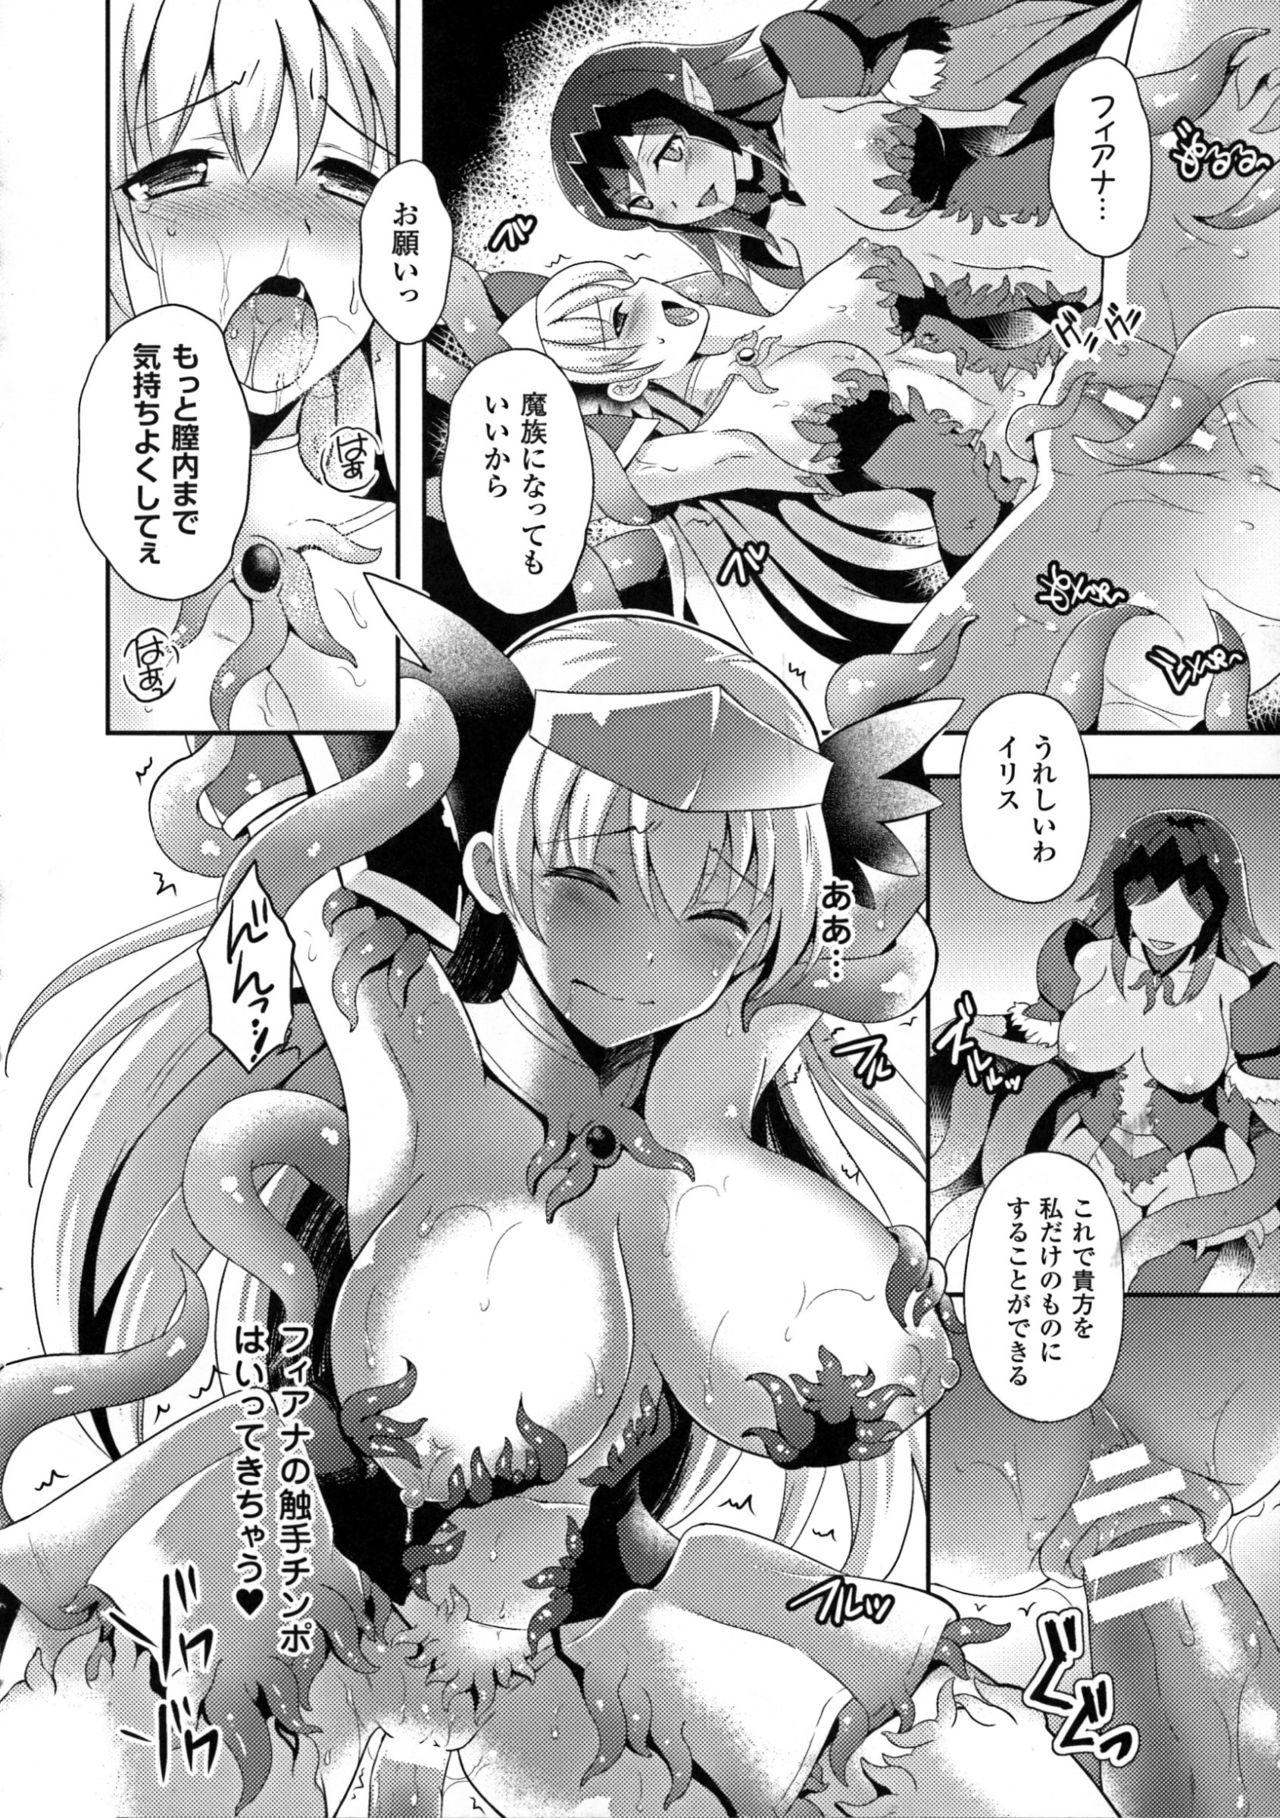 Seigi no Heroine Kangoku File DX vol. 6 216